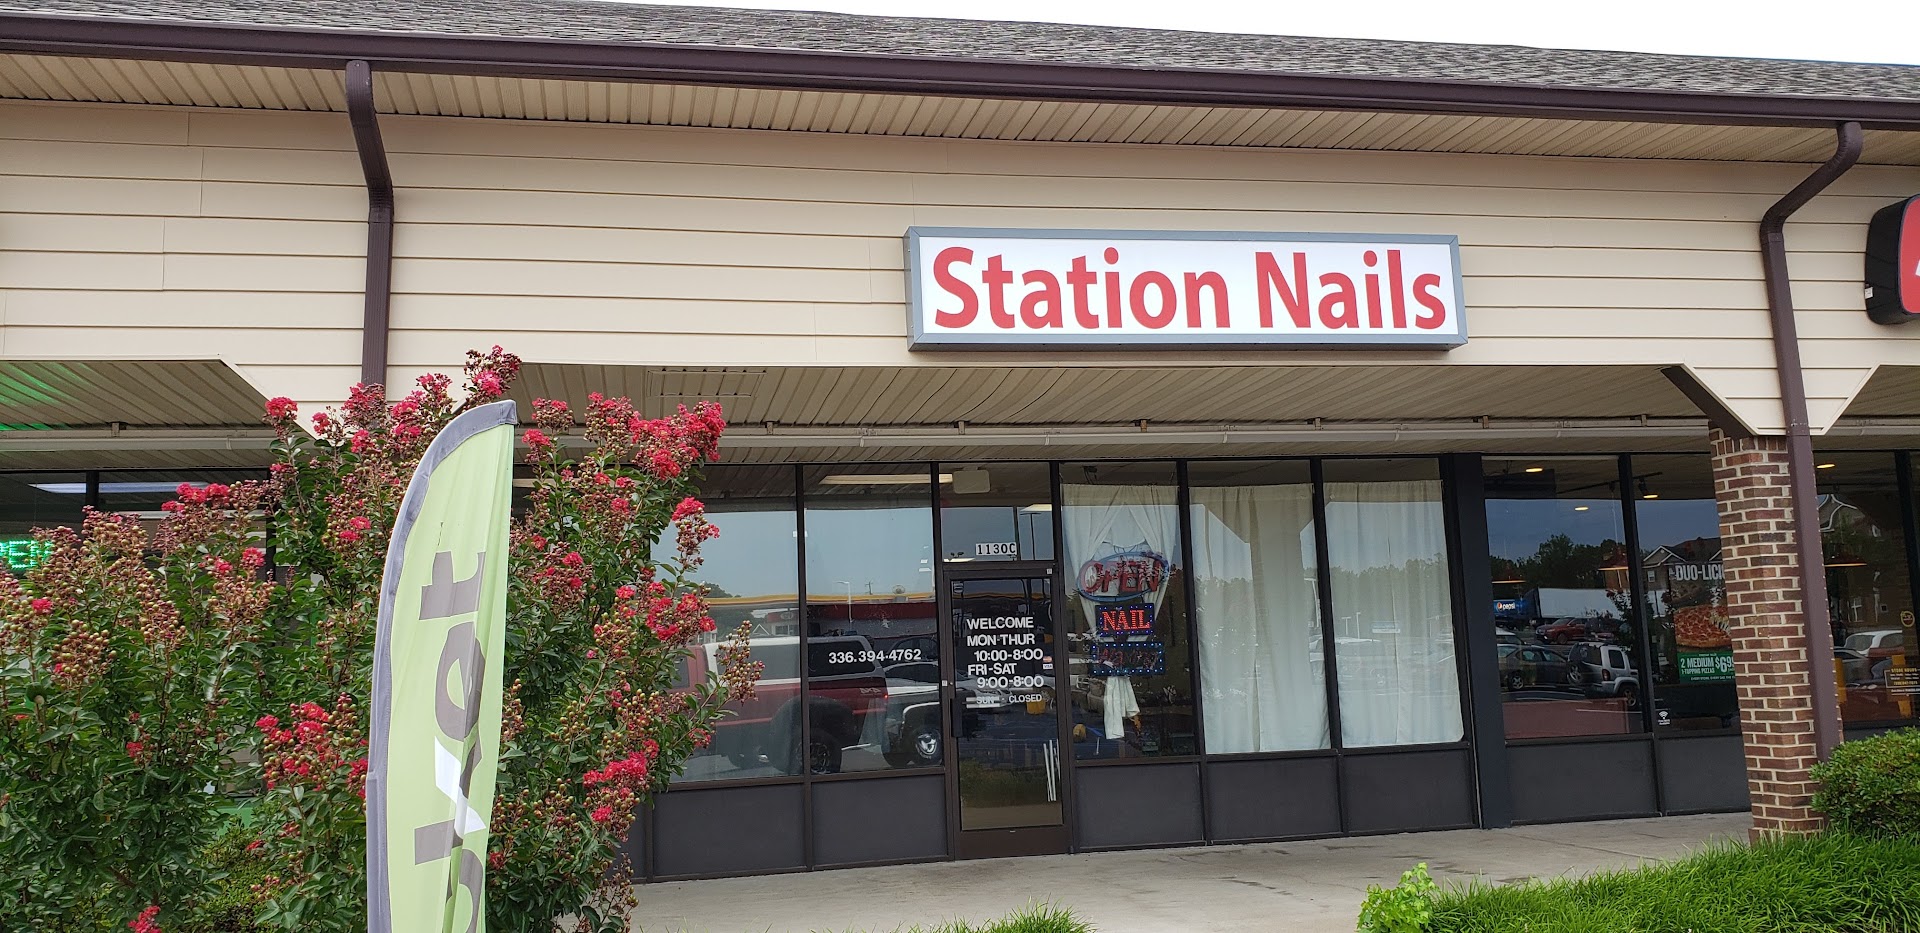 Station Nails